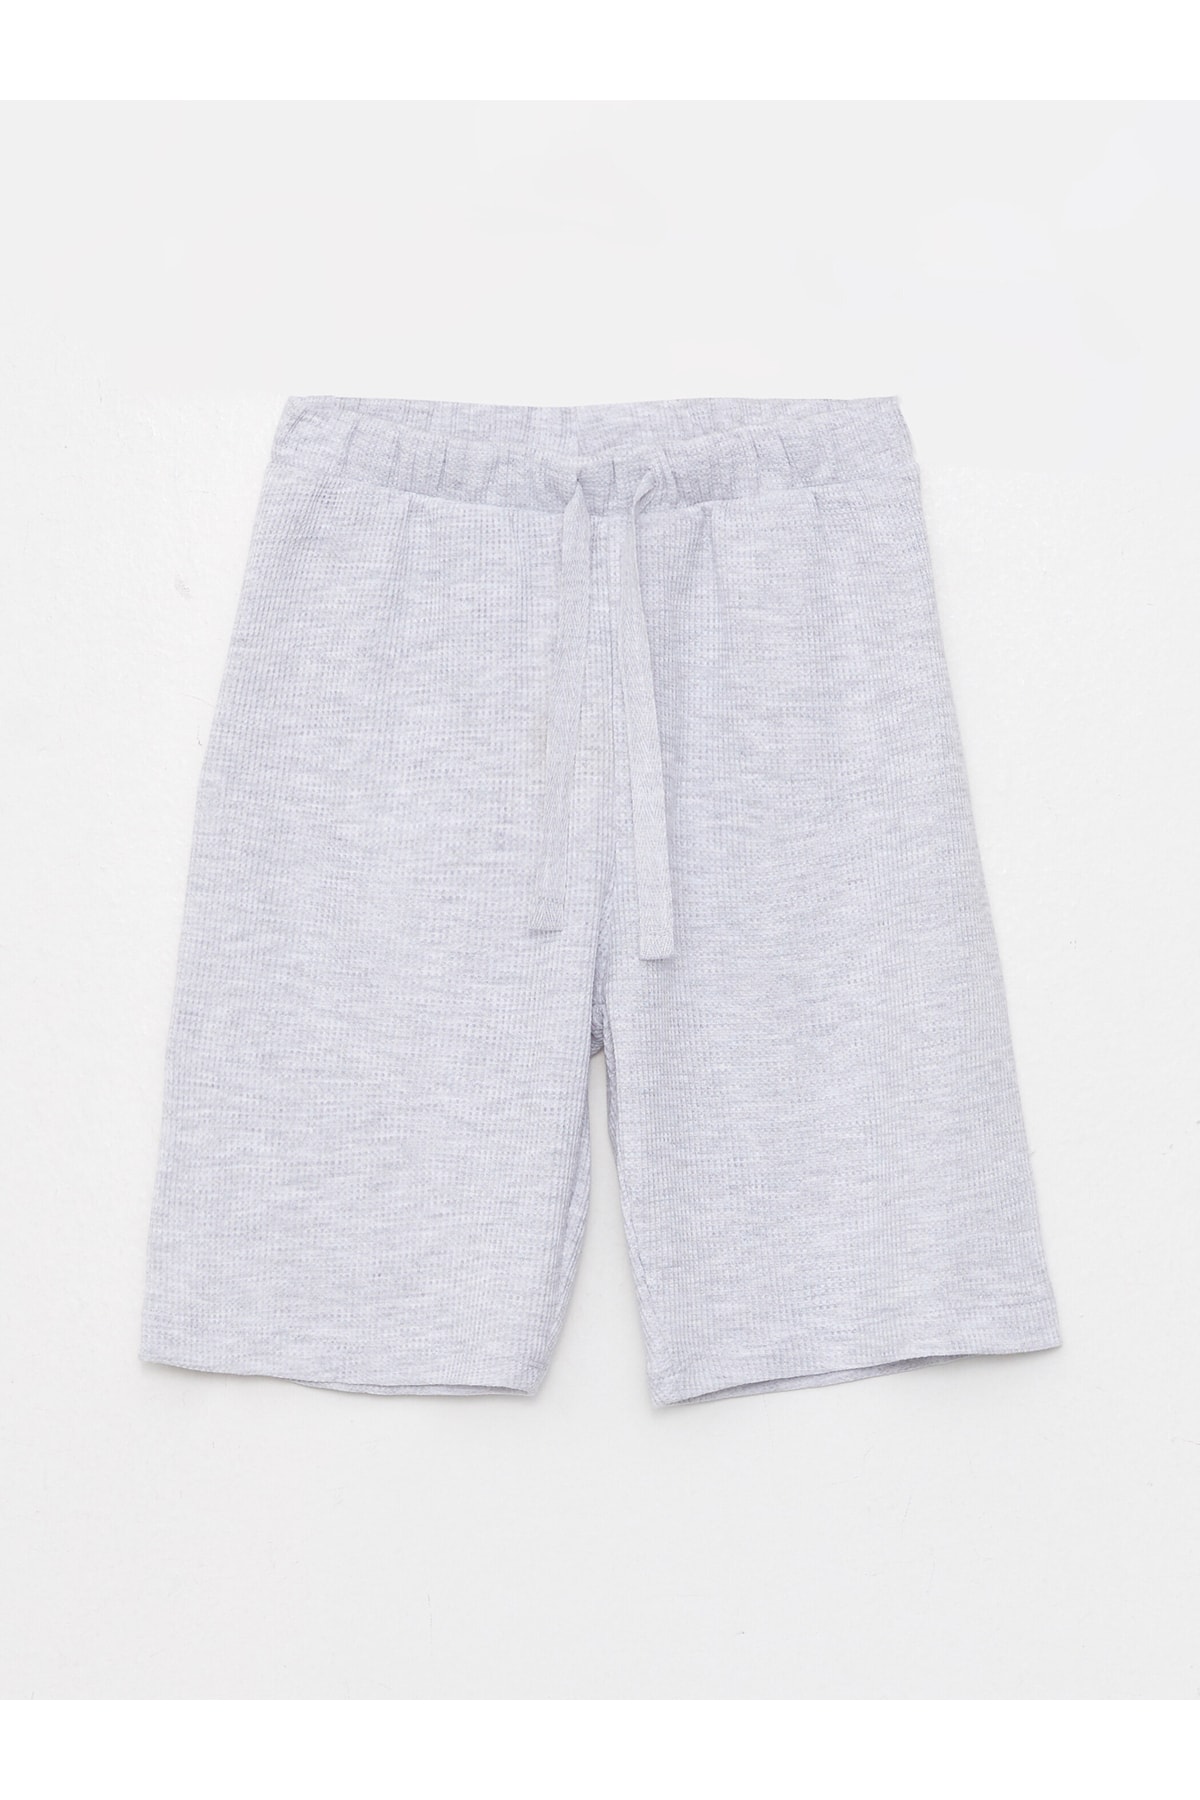 LC Waikiki Basic Boys' Pajamas Shorts With Elastic Waist.